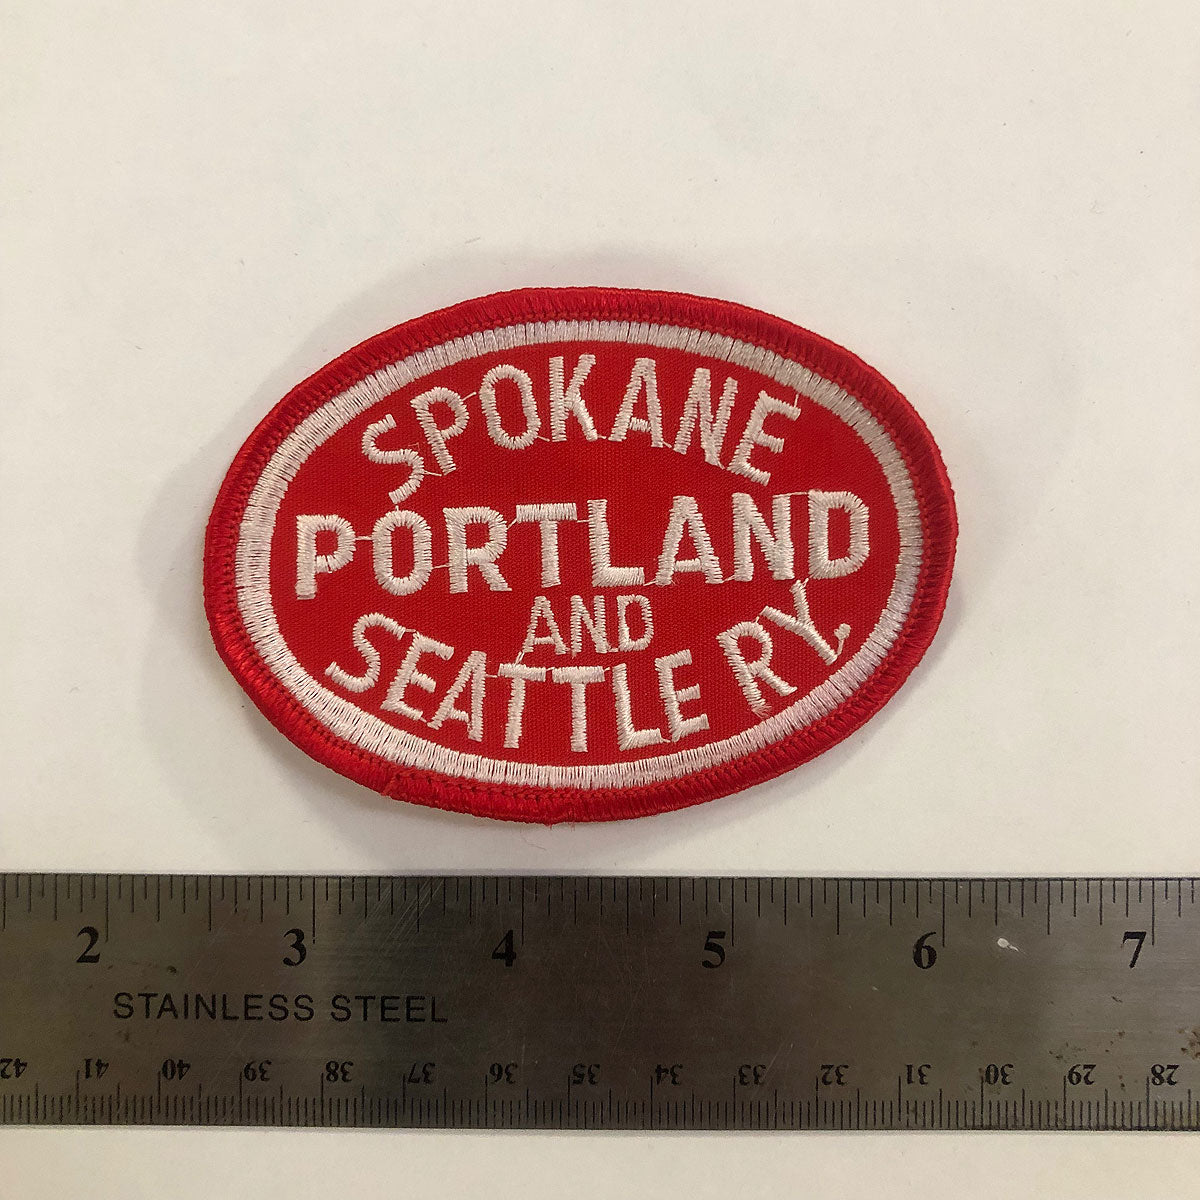 #3192 13.5oz Japanese Indigo/Indigo WABASH White Selvage Vintage HAT Patch 80s "Spokane, Portland and Seattle Railway" Patch